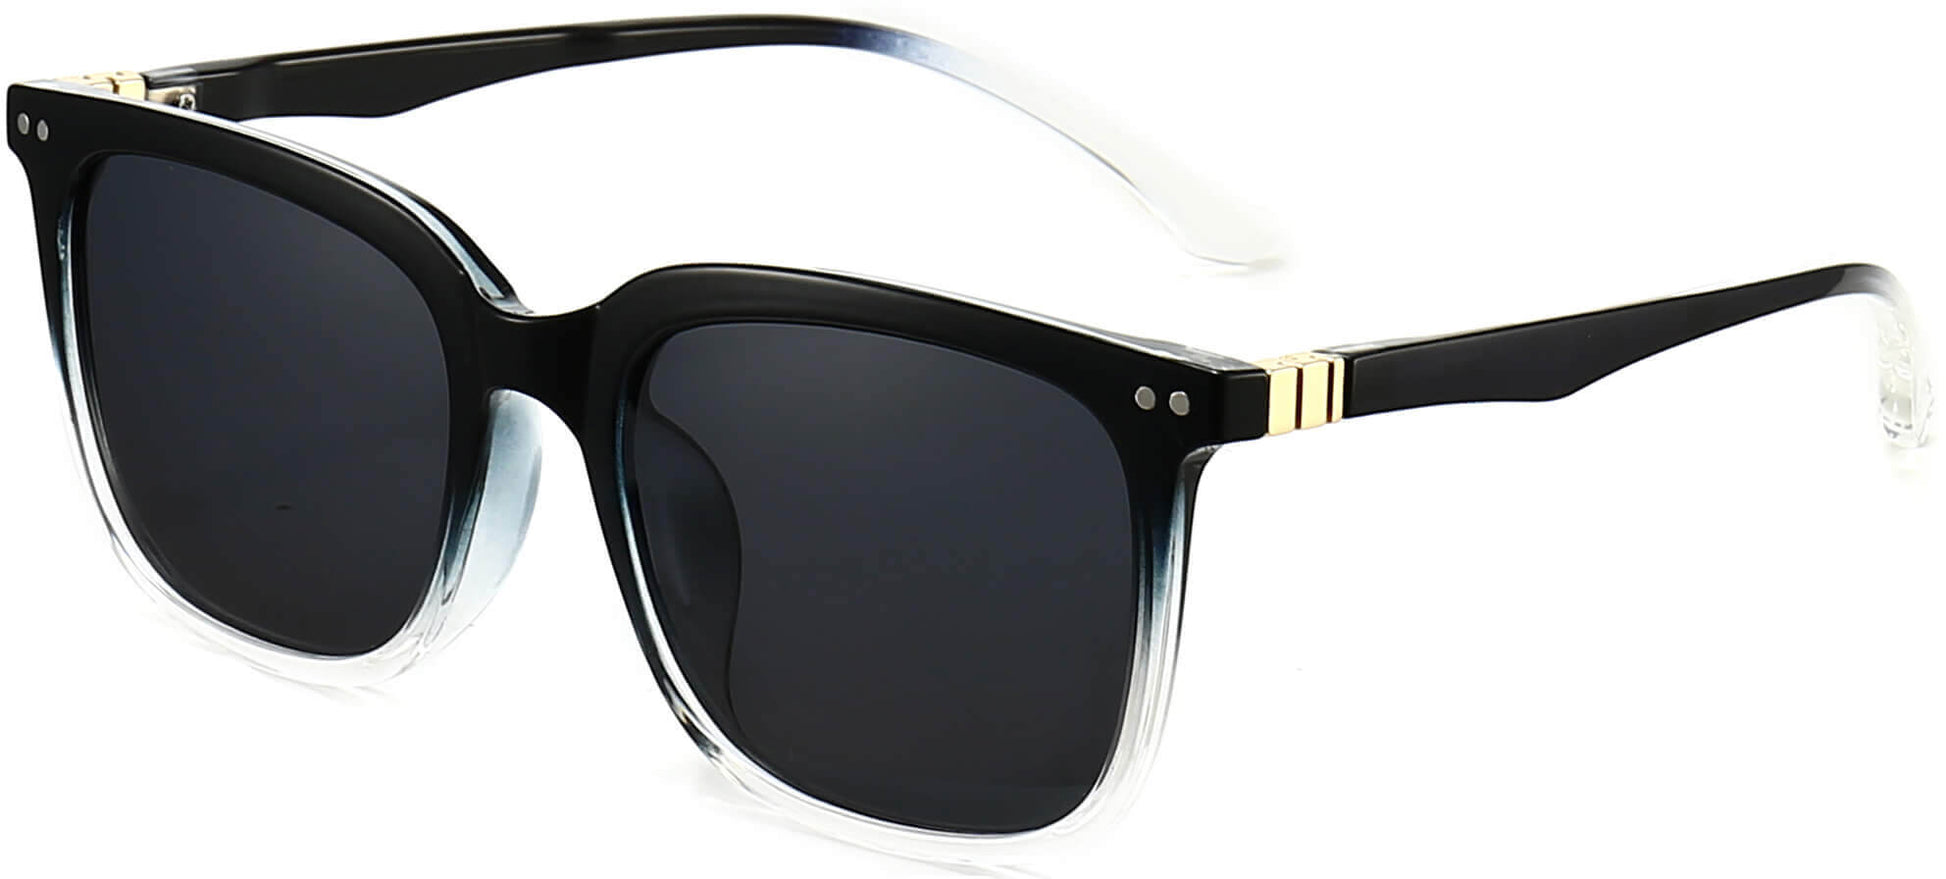 Sofia Black Plastic Sunglasses from ANRRI, angle view